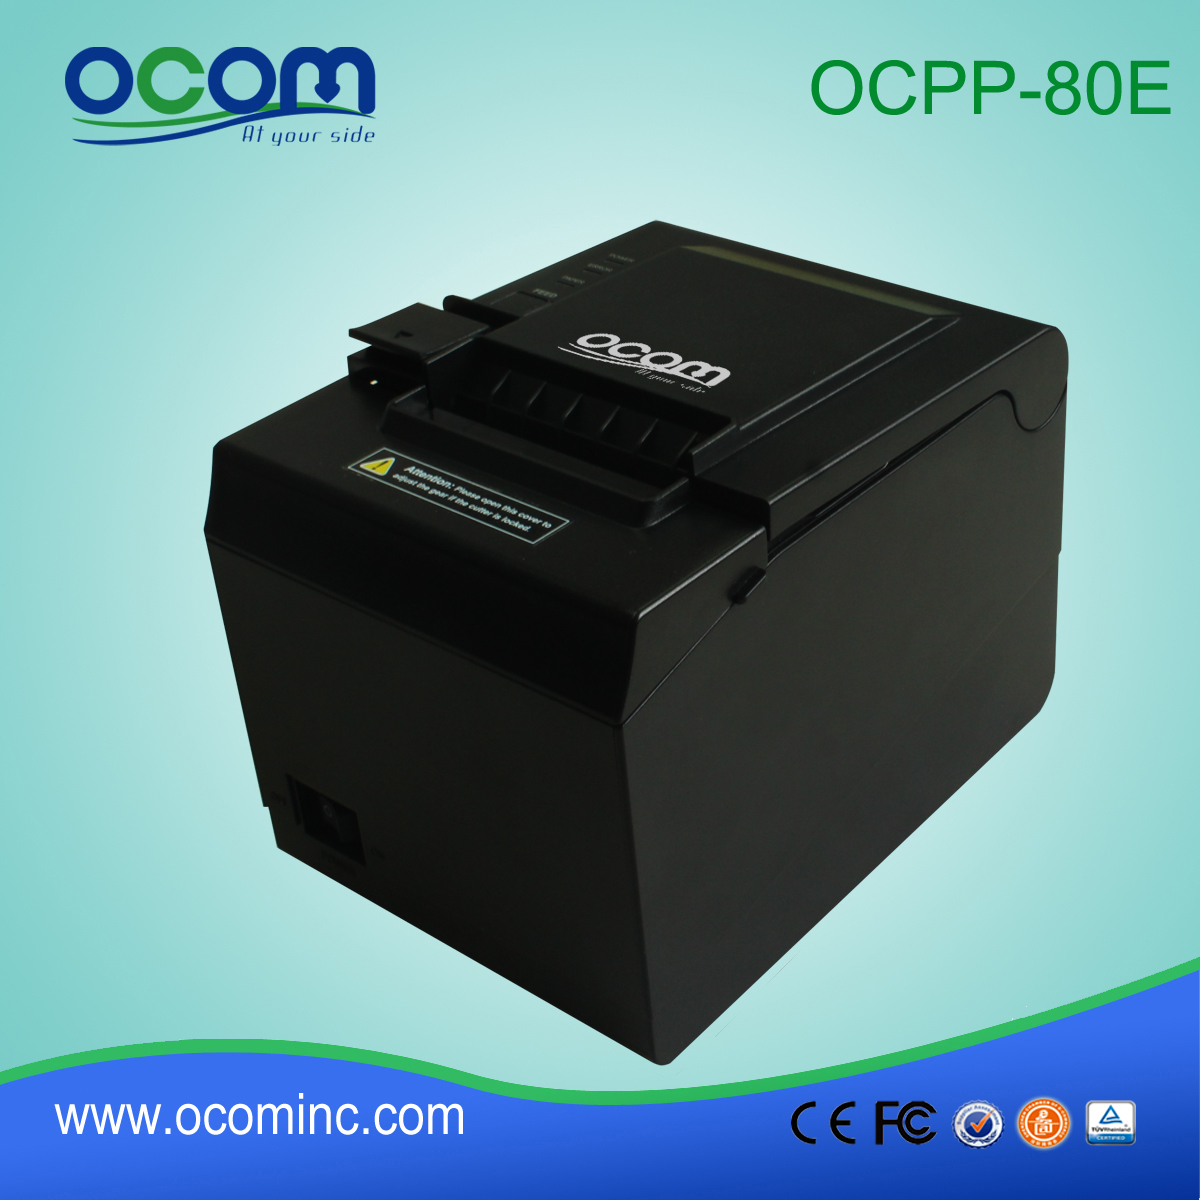 OCPP-80E bester Qualität 80 mm POS Thermal Printer Preis